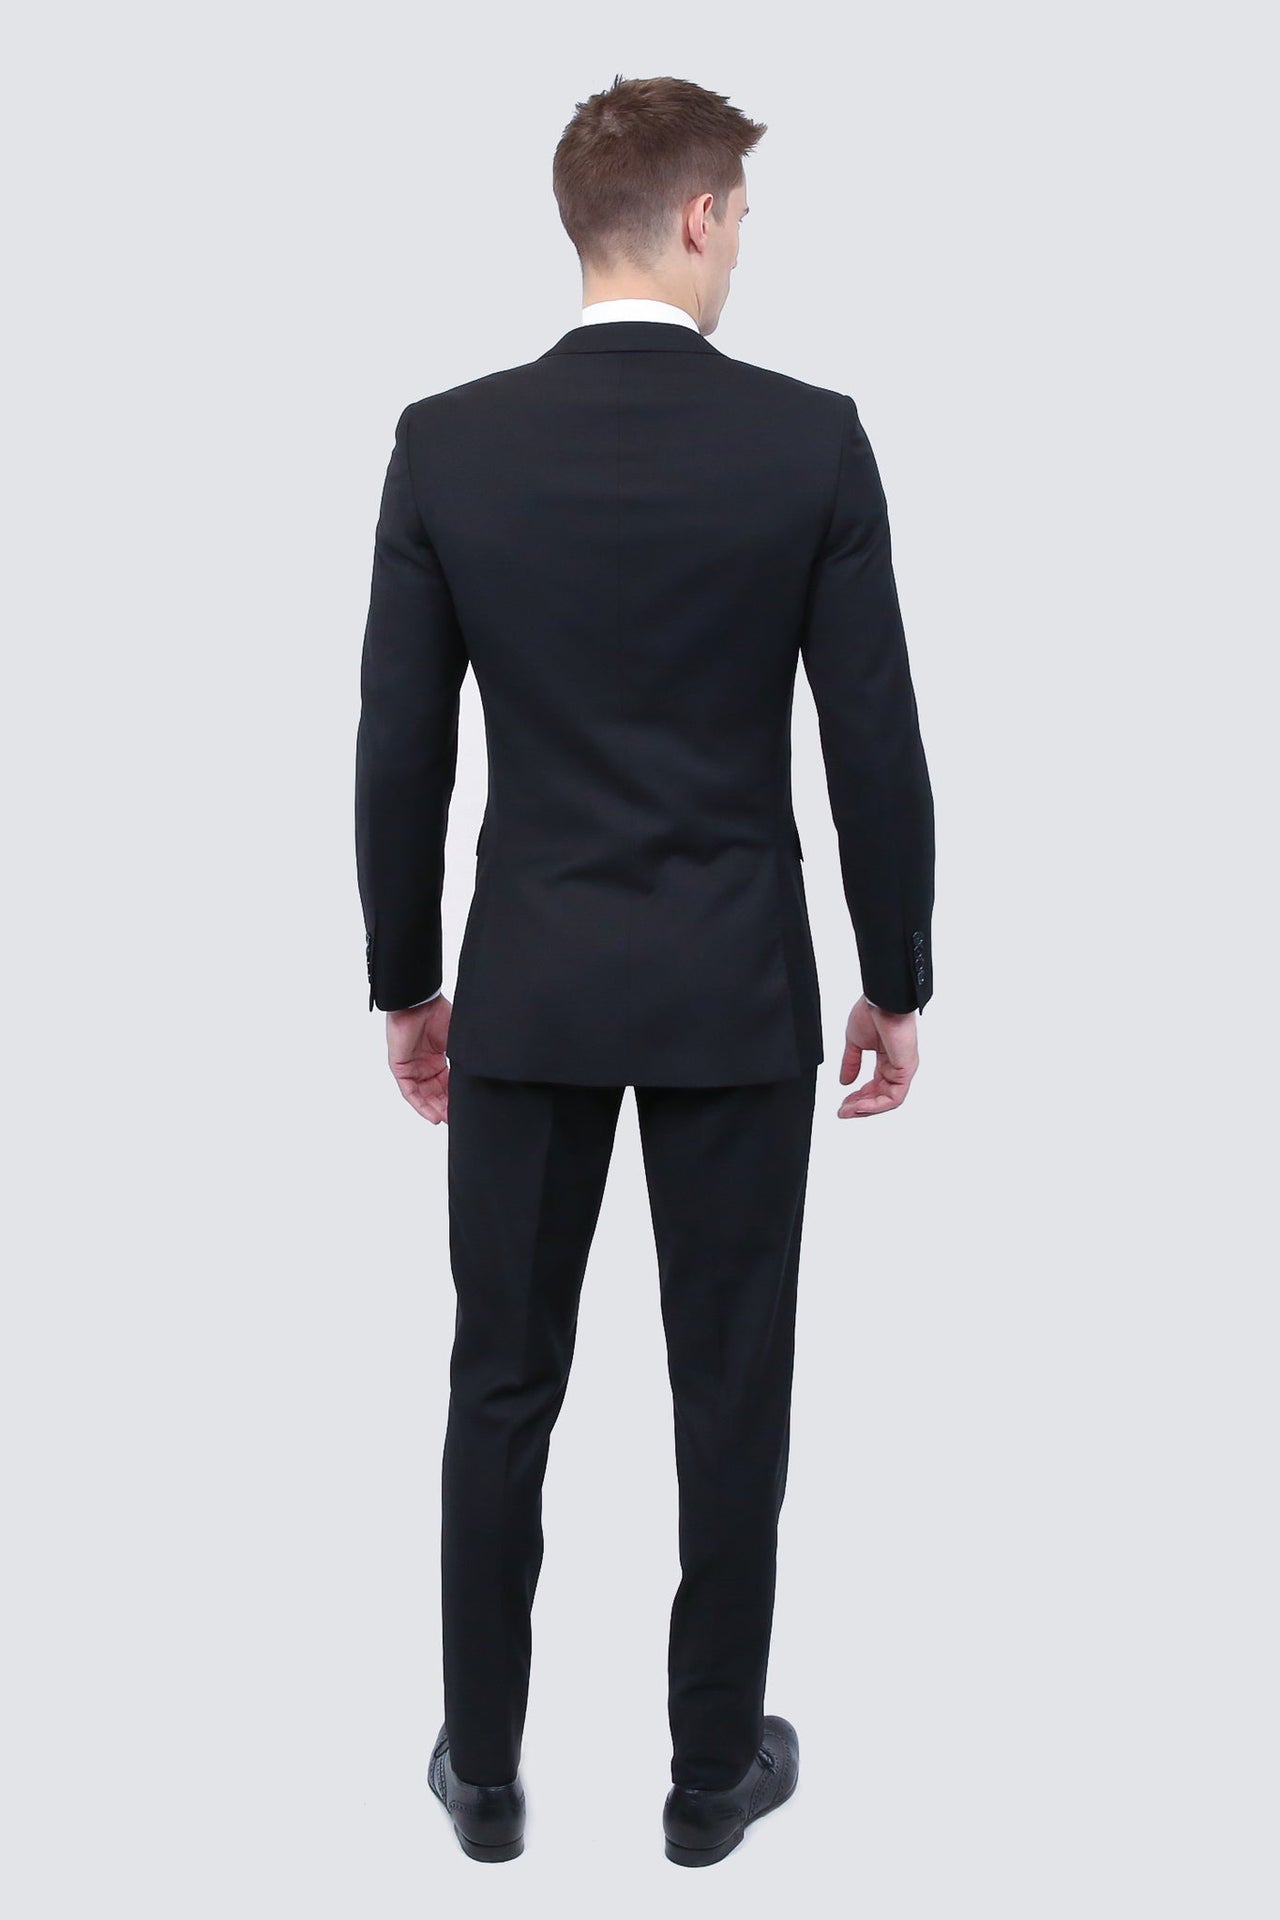 Tailor's Stretch Blend Suit | Classic Black Modern or Slim Fit - Tomasso Black